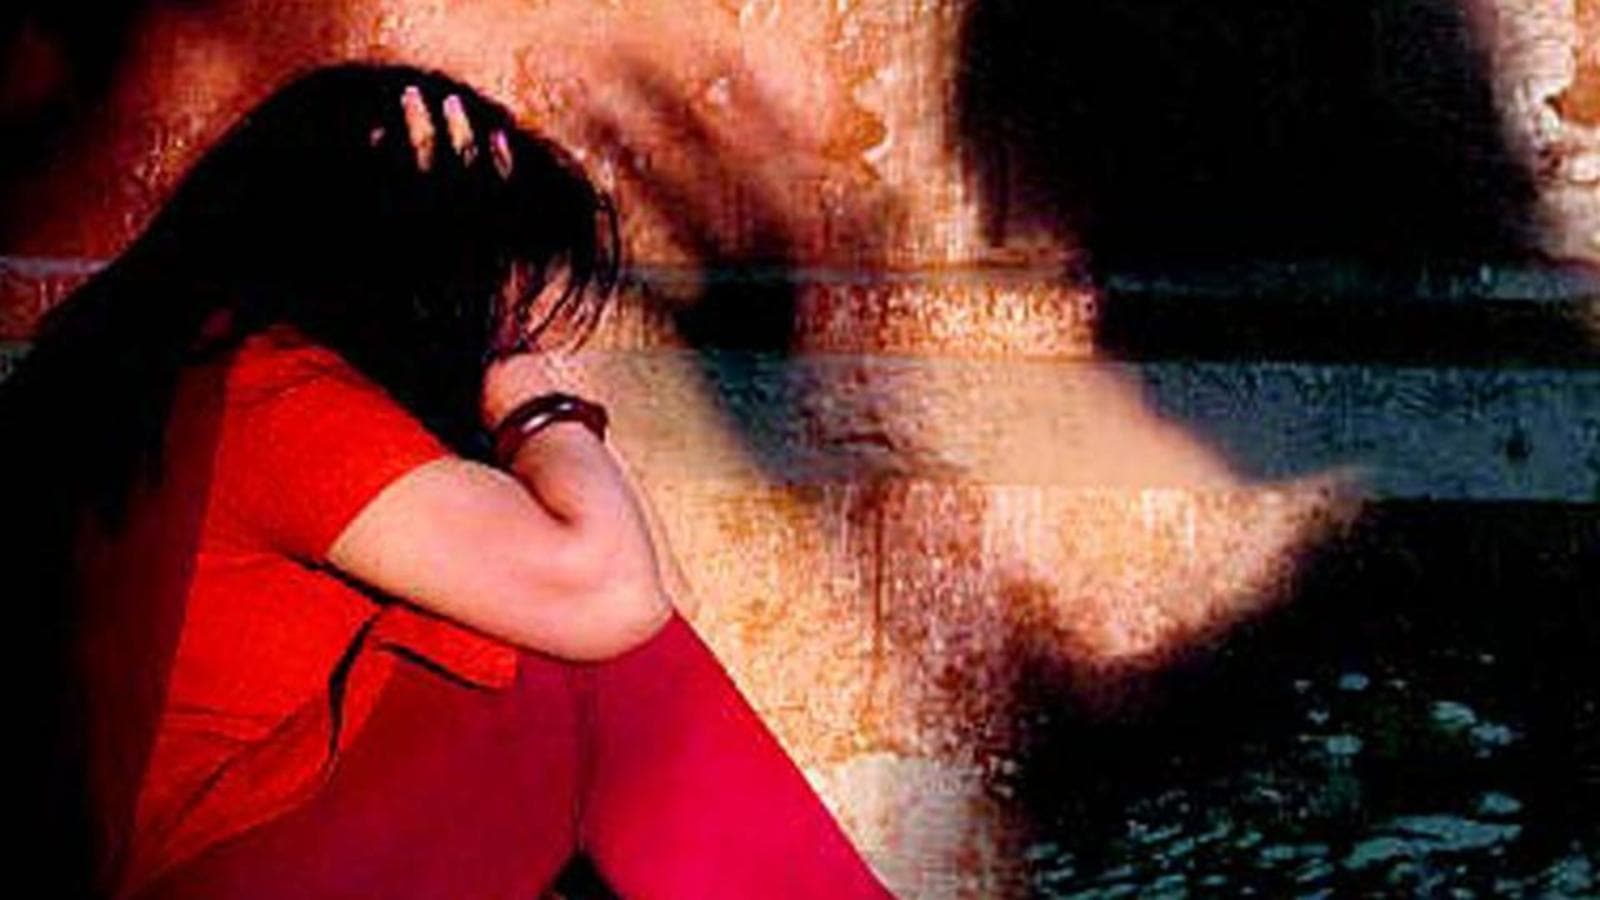 Indian Girls Rape Gang Xxx Village - Kerala model gang-raped in Kochi, one arrested: Police | Latest News India  - Hindustan Times